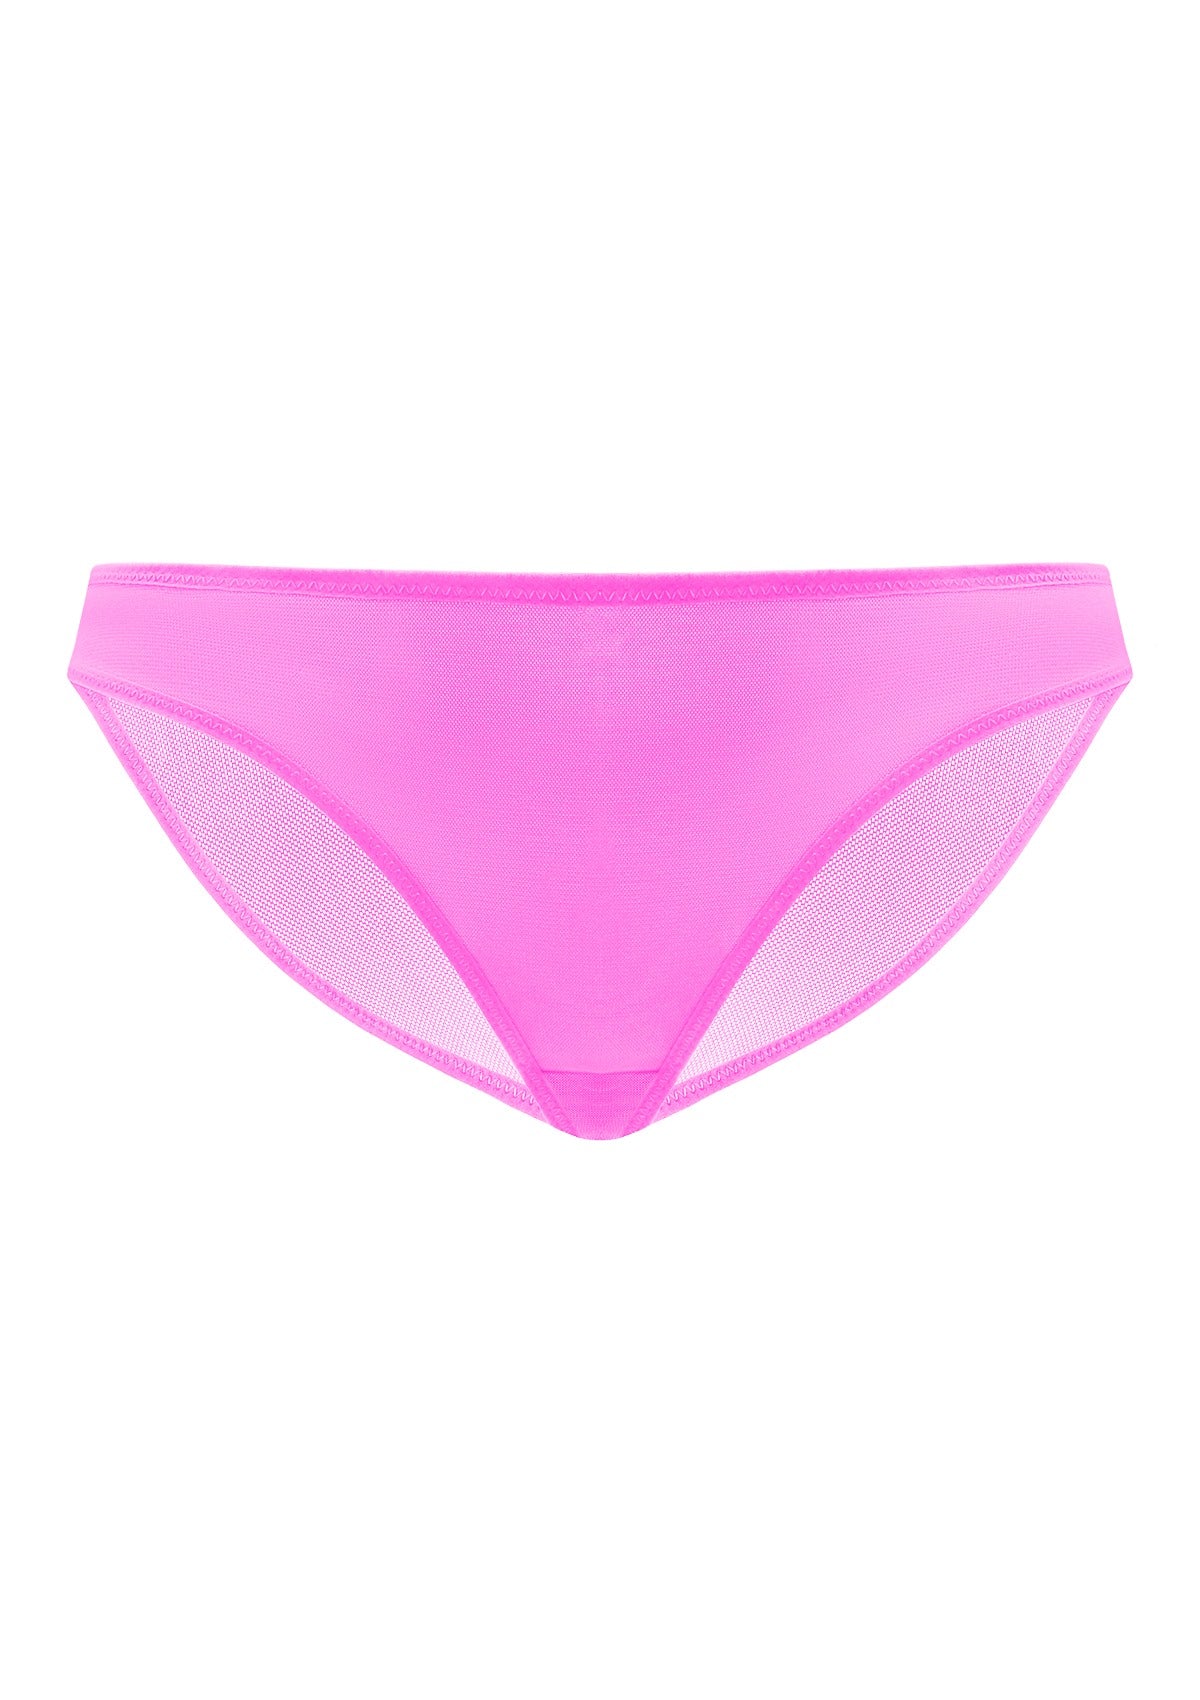 HSIA Billie Smooth Sheer Mesh Lightweight Soft Comfy Bikini Underwear - L / Black